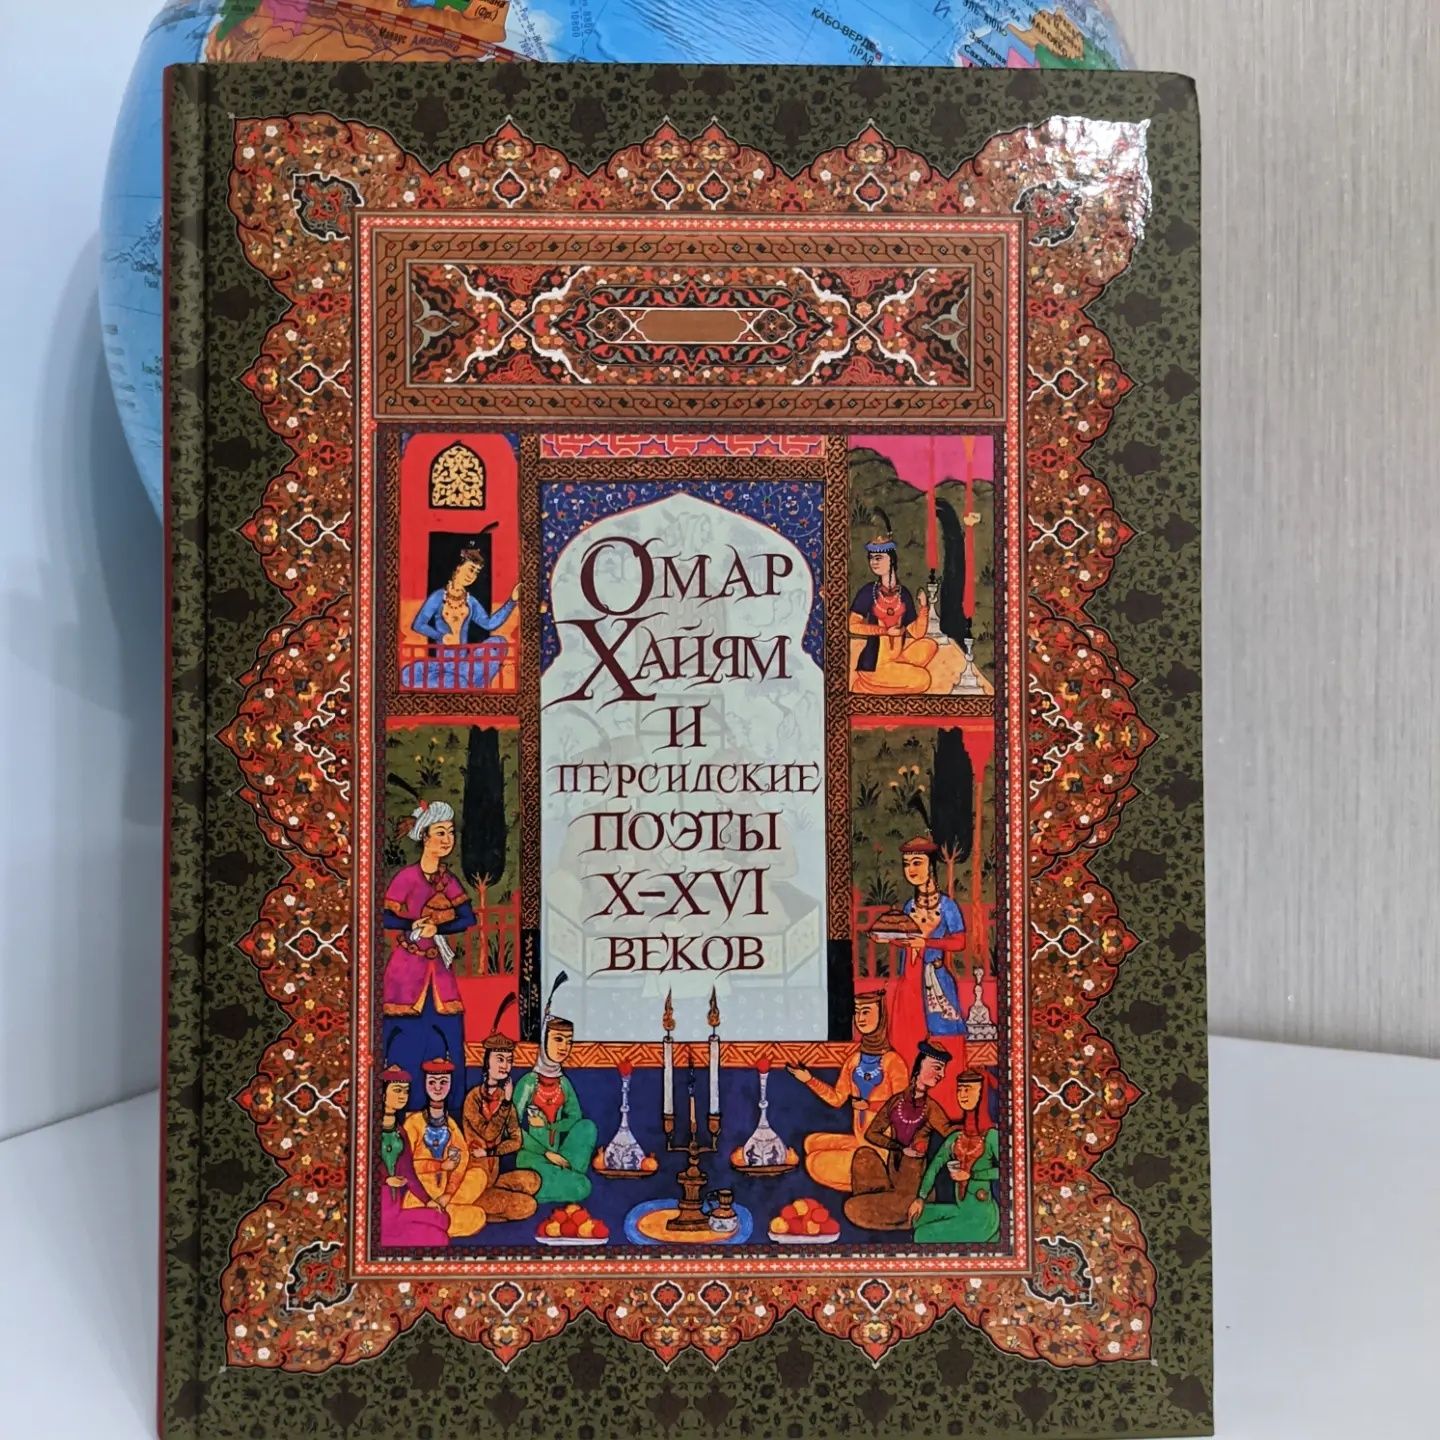 Омар Хайям: Омар Хайям и персидские поэты Х-ХVI веков. Рубайят